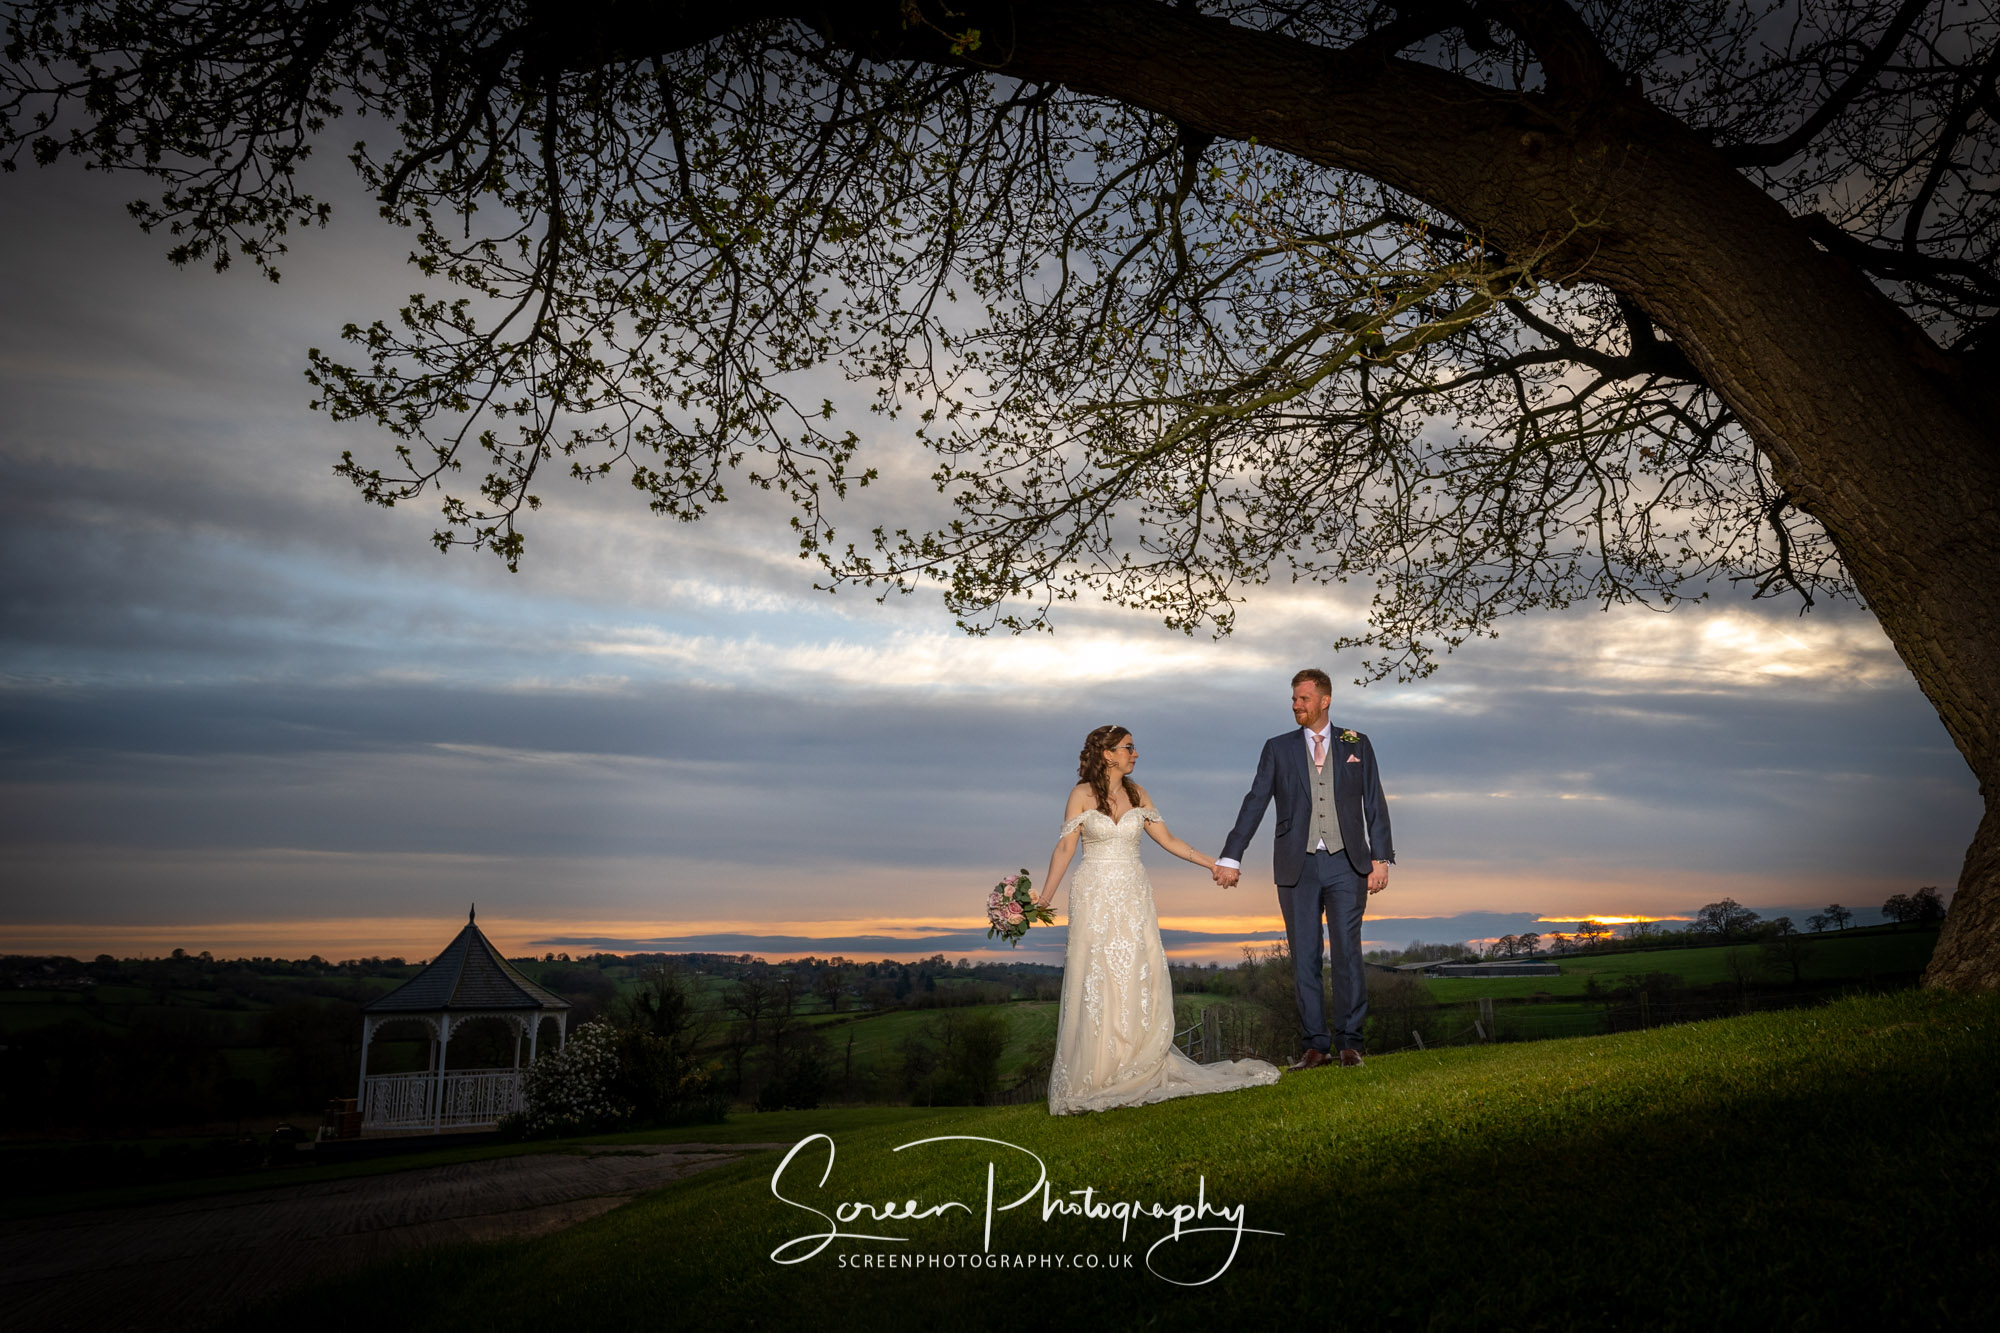 The Shottle Hall Estate Wedding Venue Derby Derbyshire Peak District sunset glow couple bride groom